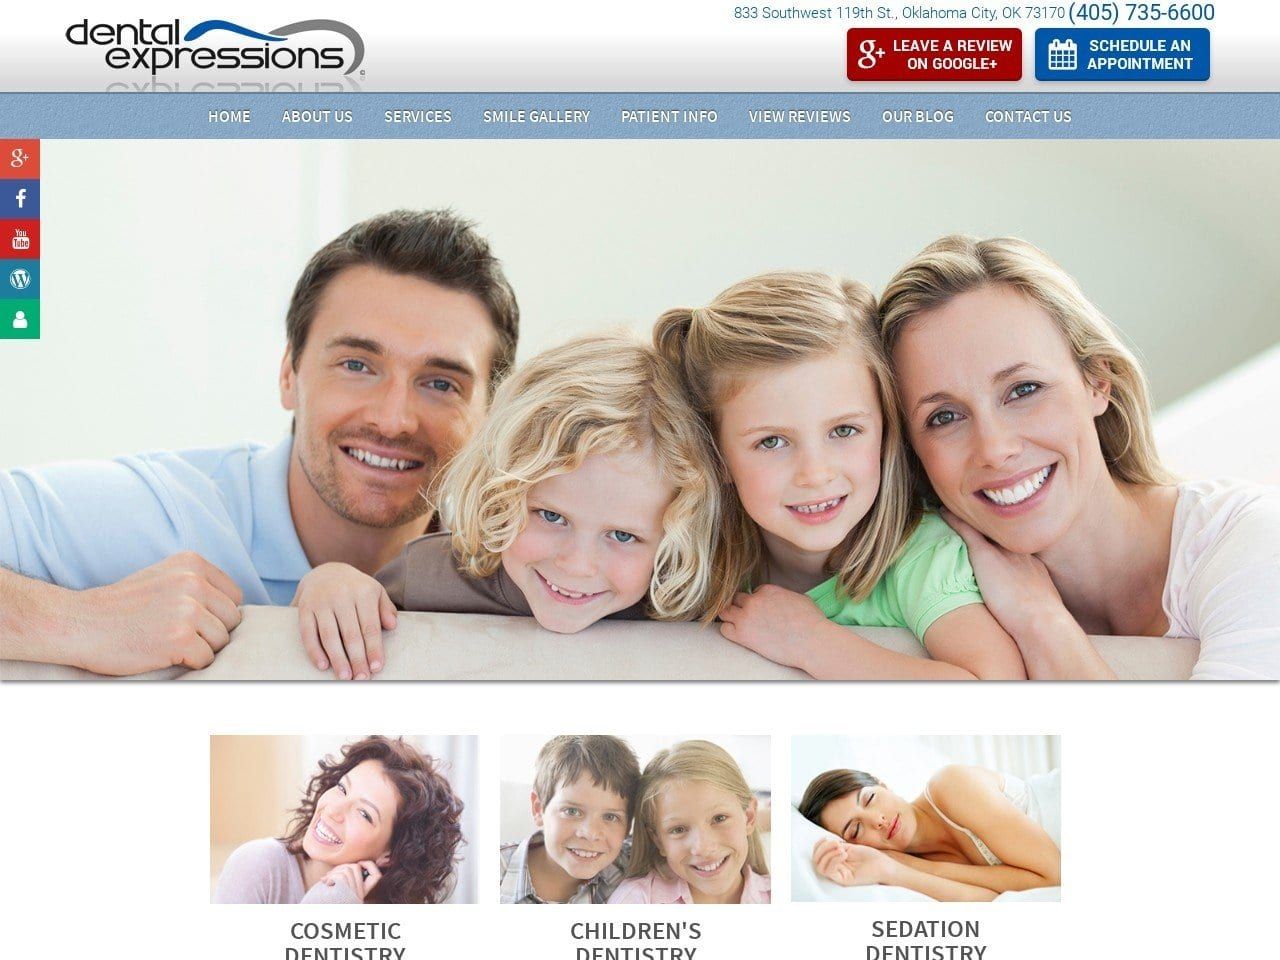 Dental Expressions Website Screenshot from okdentalexpressions.com